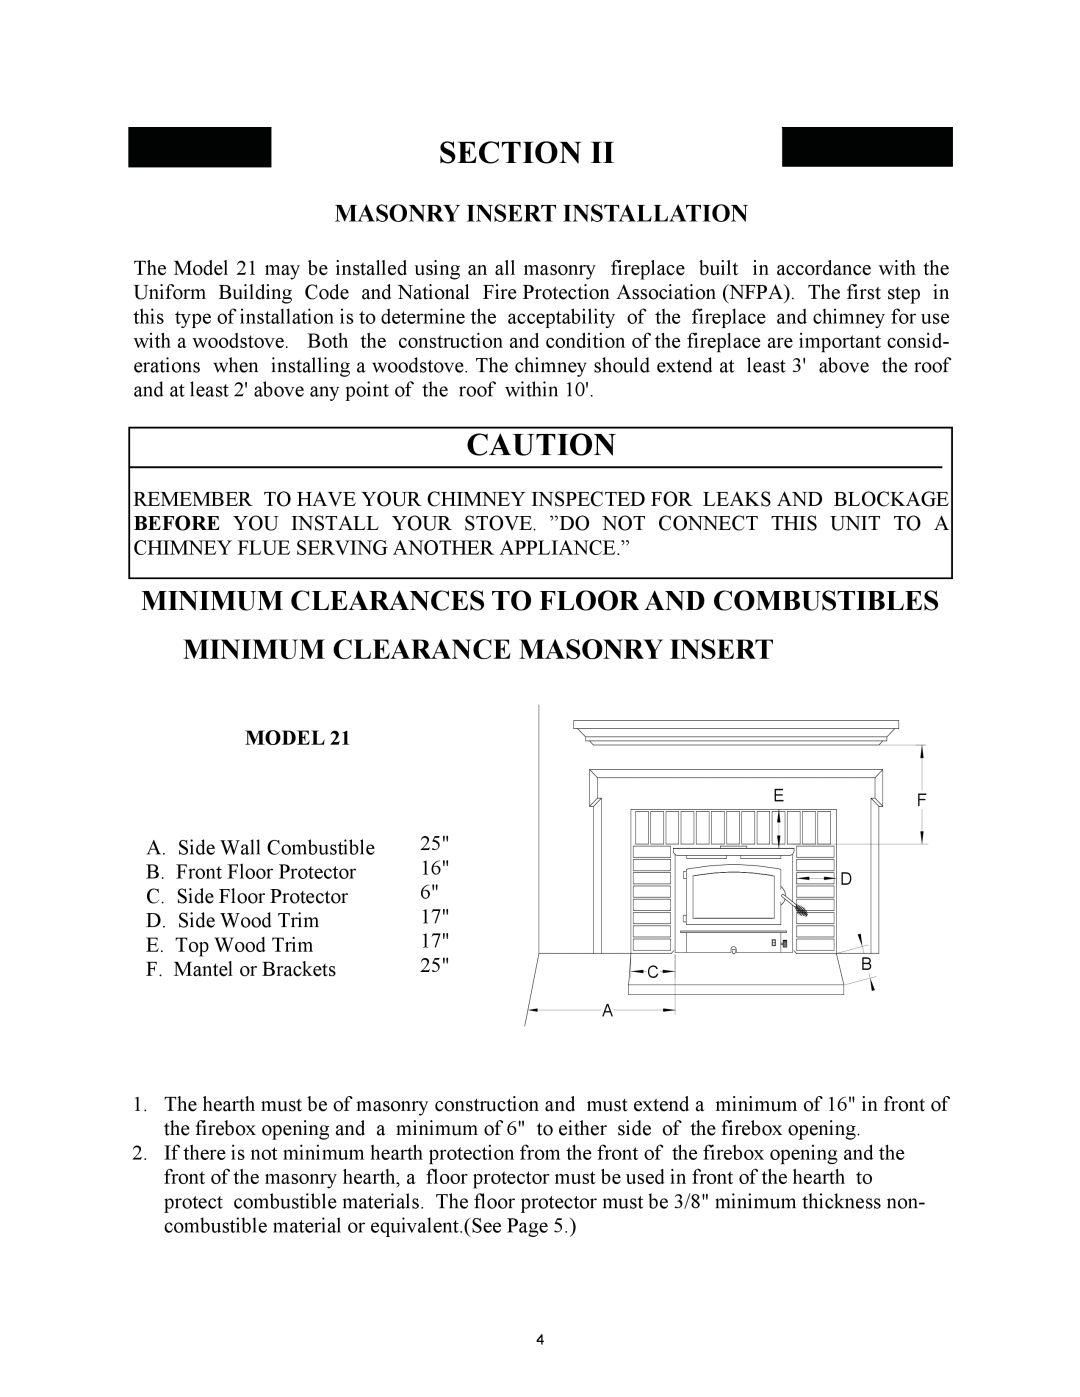 New Buck Corporation 21 installation instructions Masonry Insert Installation, Section, Model 